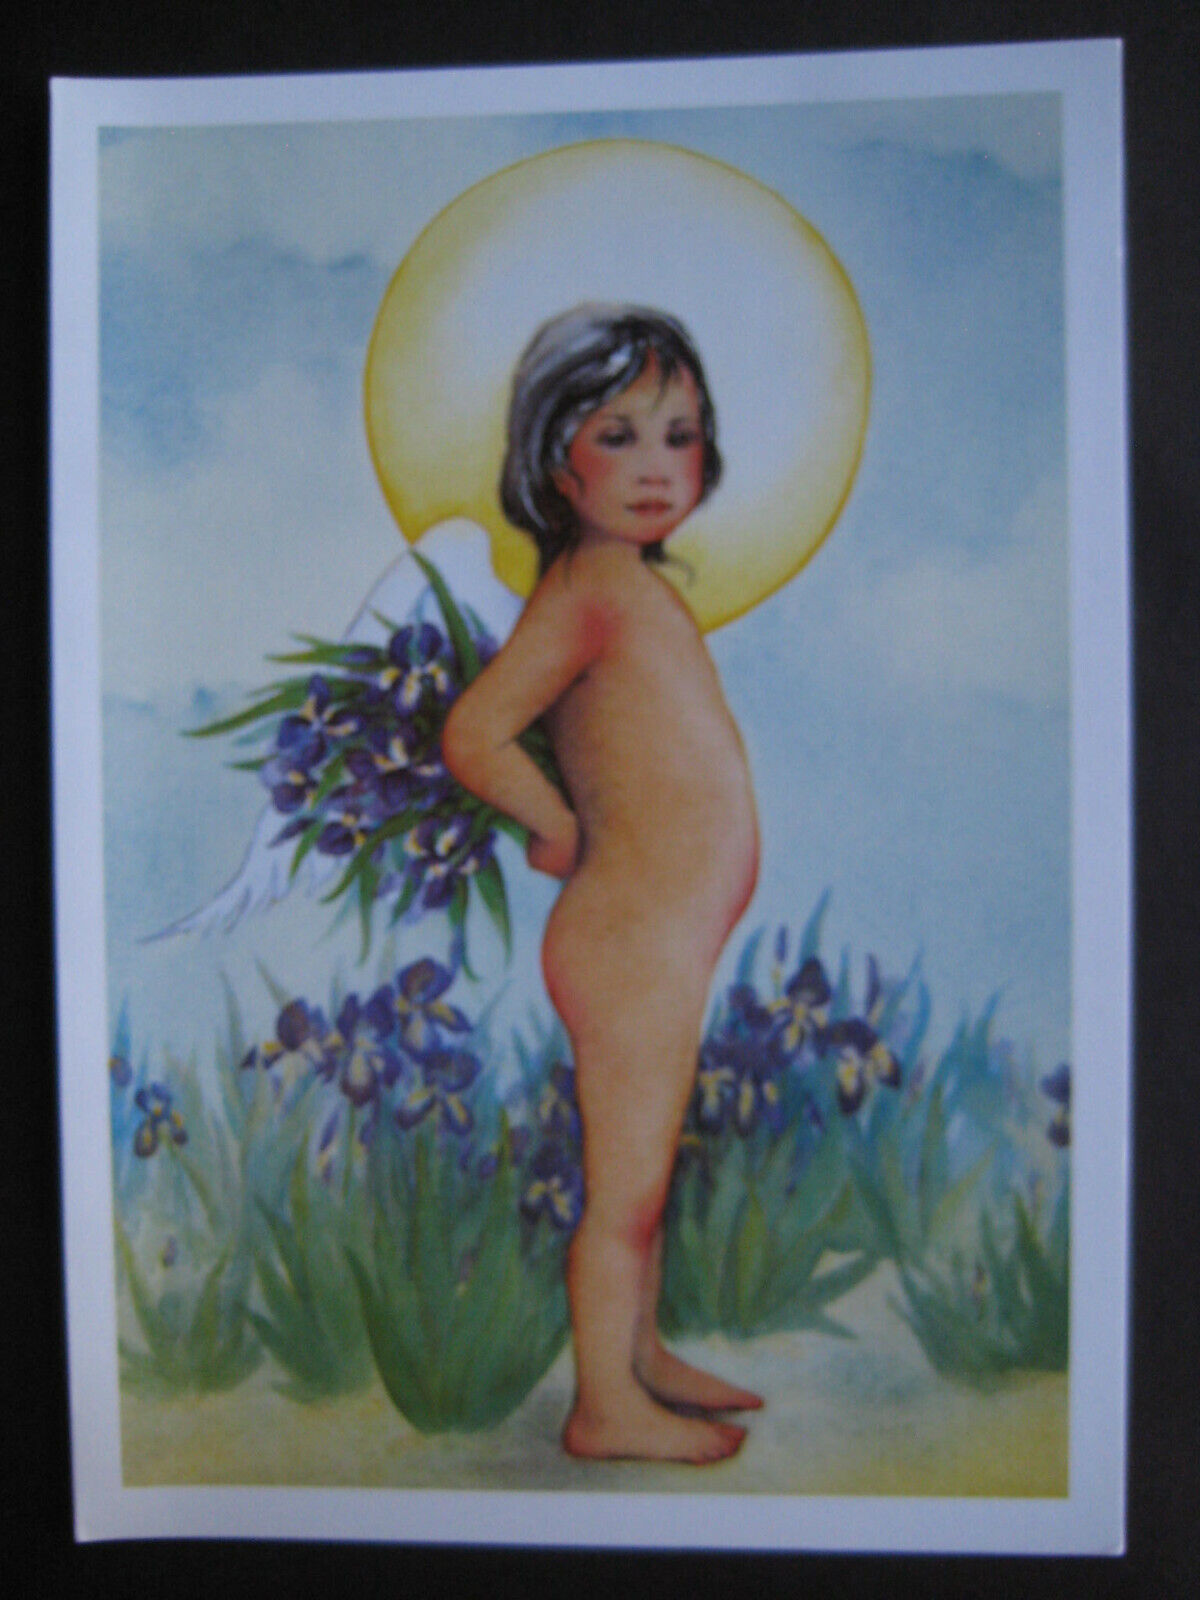  UNUSED greeting card By Sasha St. John BLANK Gentle Soul - Angel w/ Irises